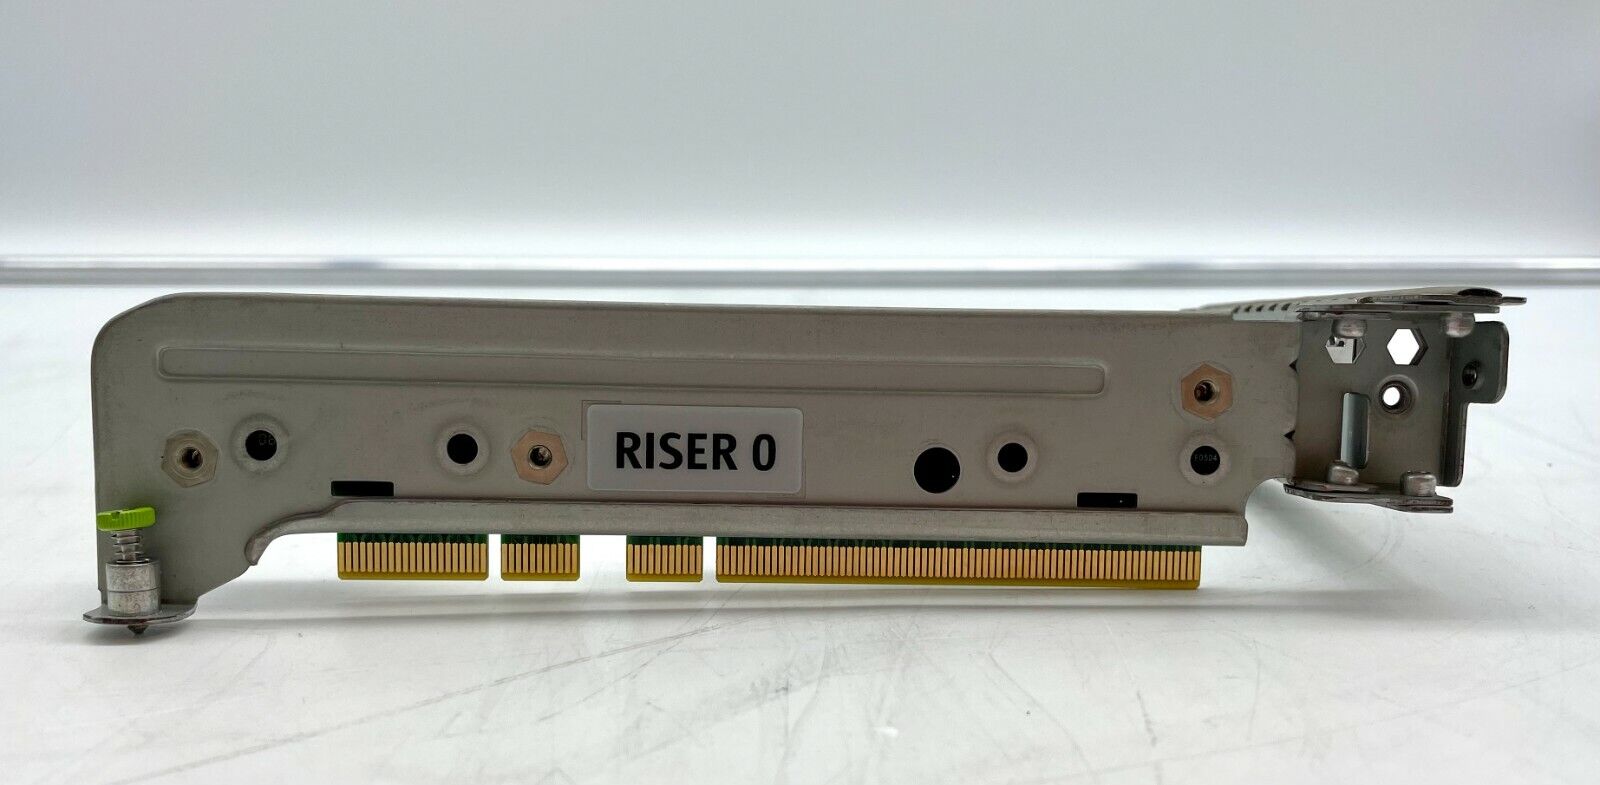 Sun X4 PCI Riser-0 for Netra T5220, 371-2529